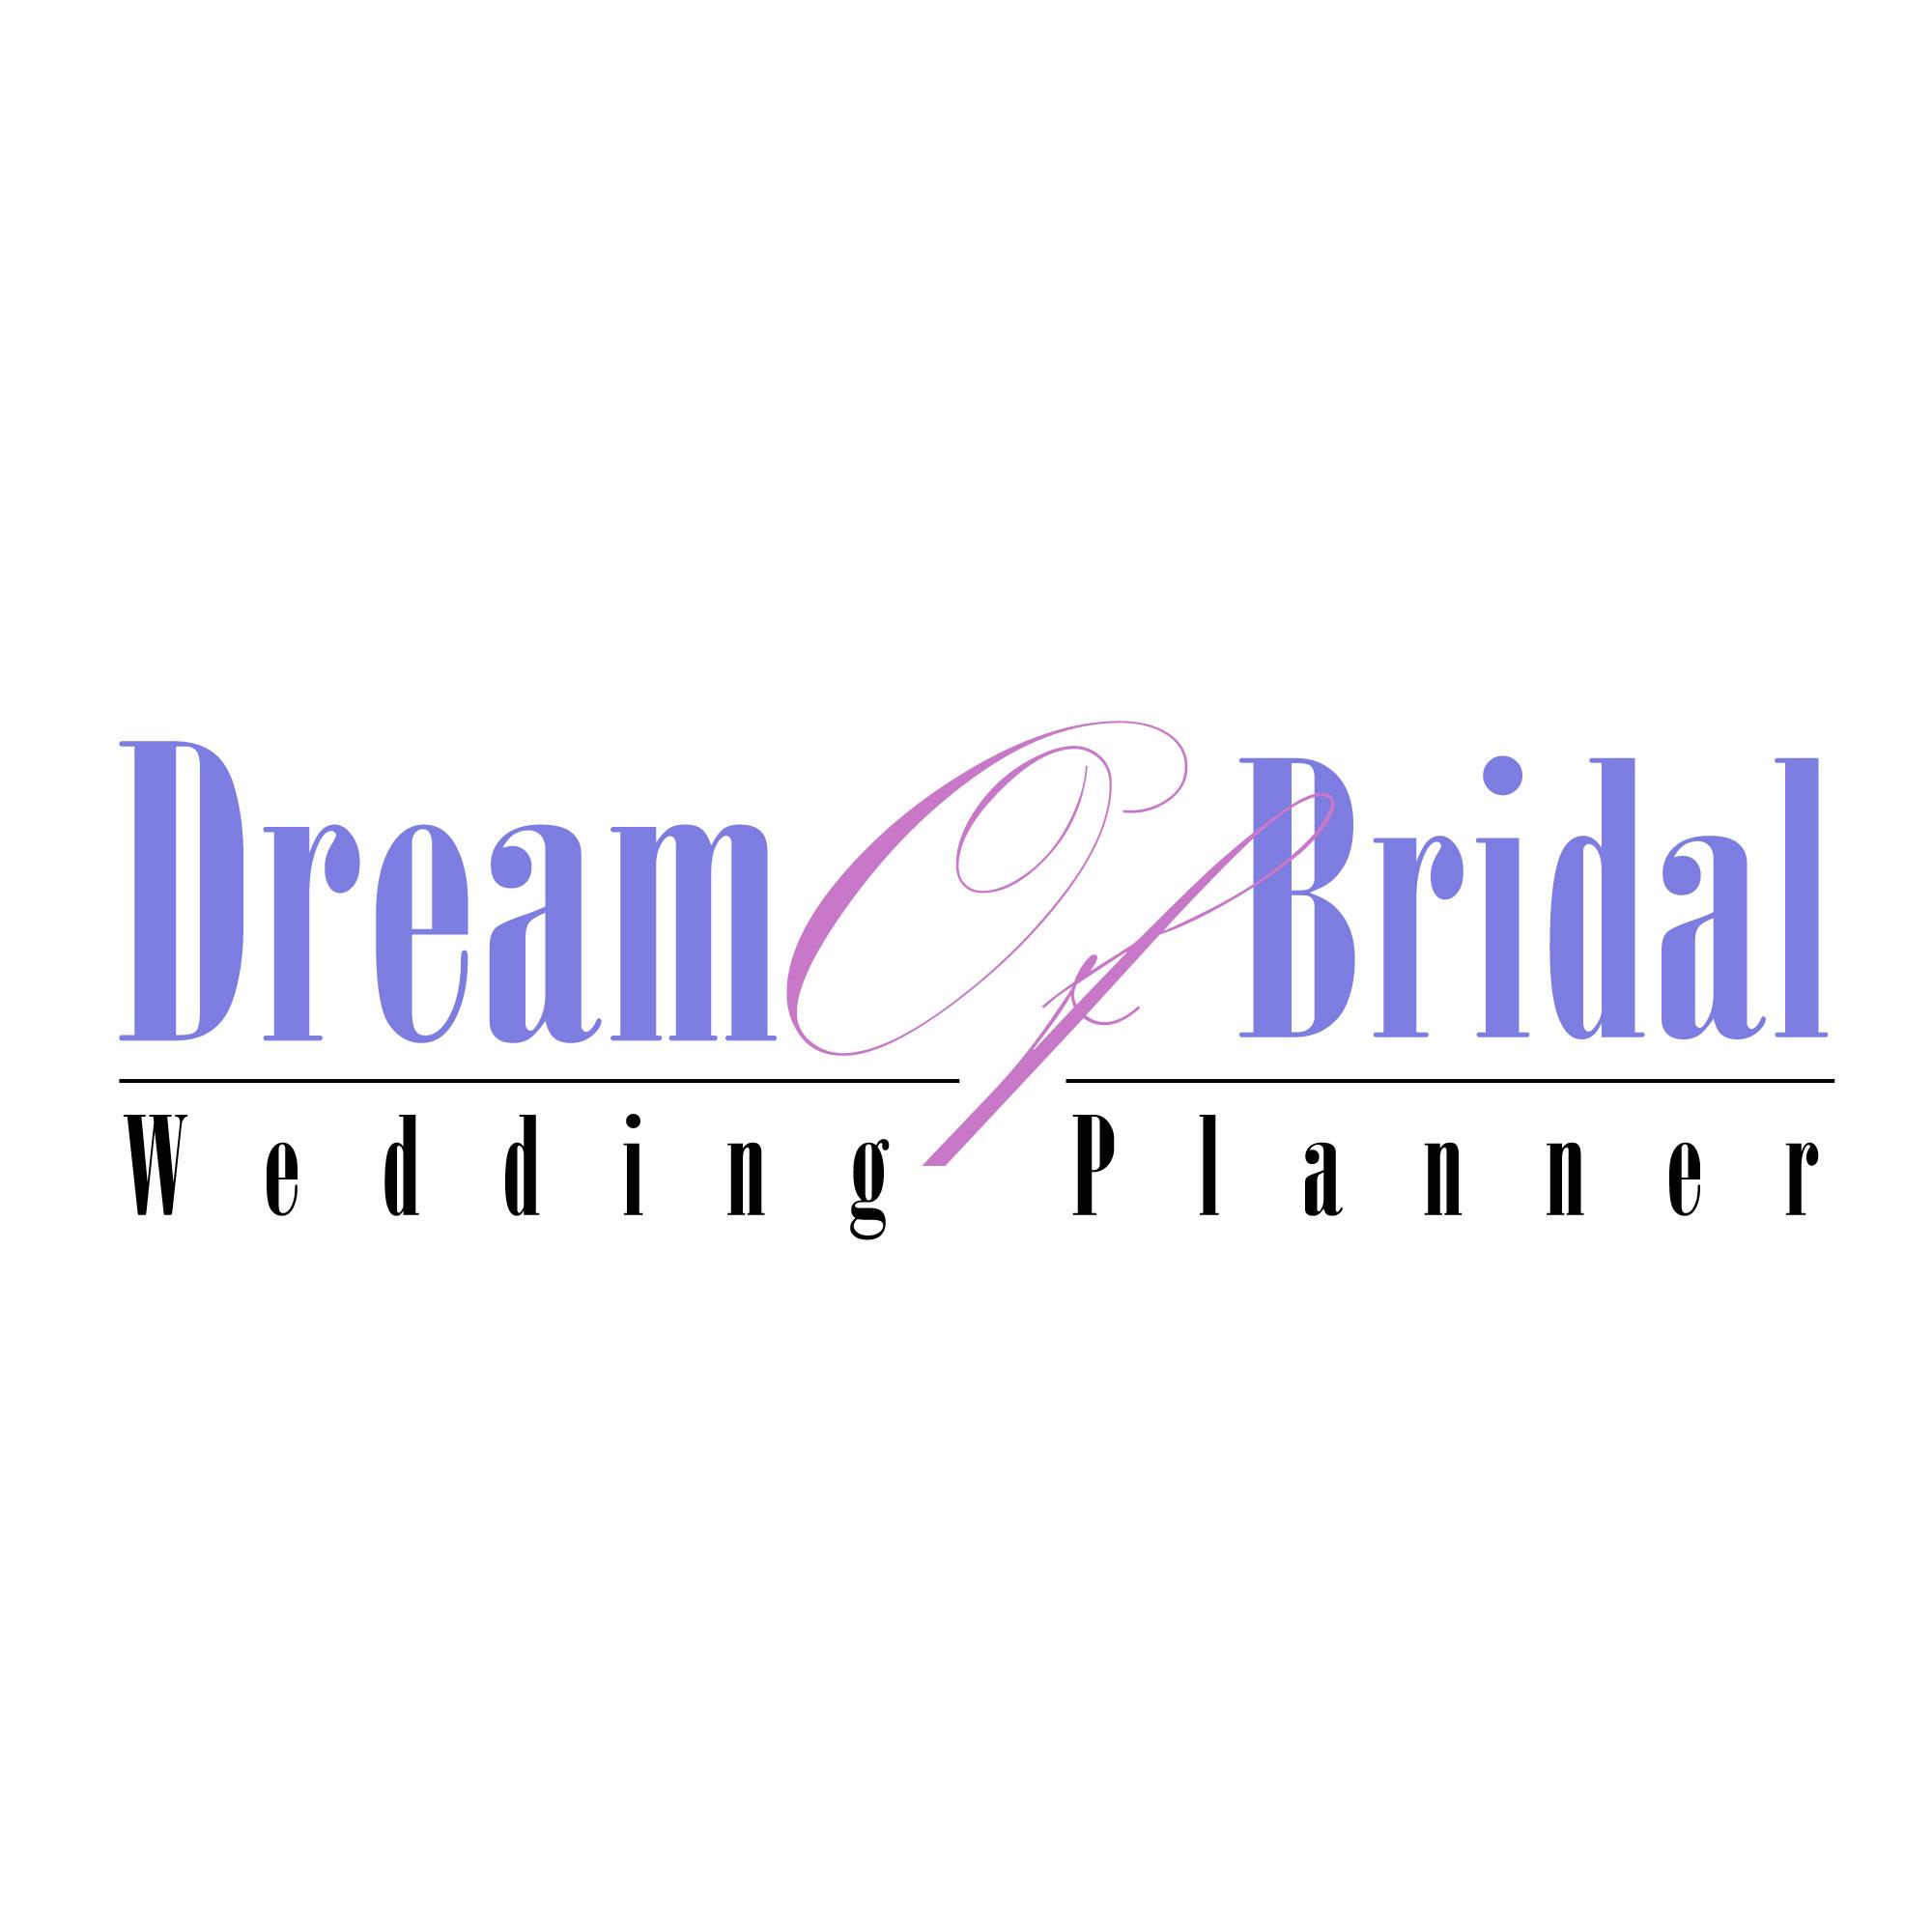 西式婚禮統籌推介: Dream of Bridal - Wedding Planner